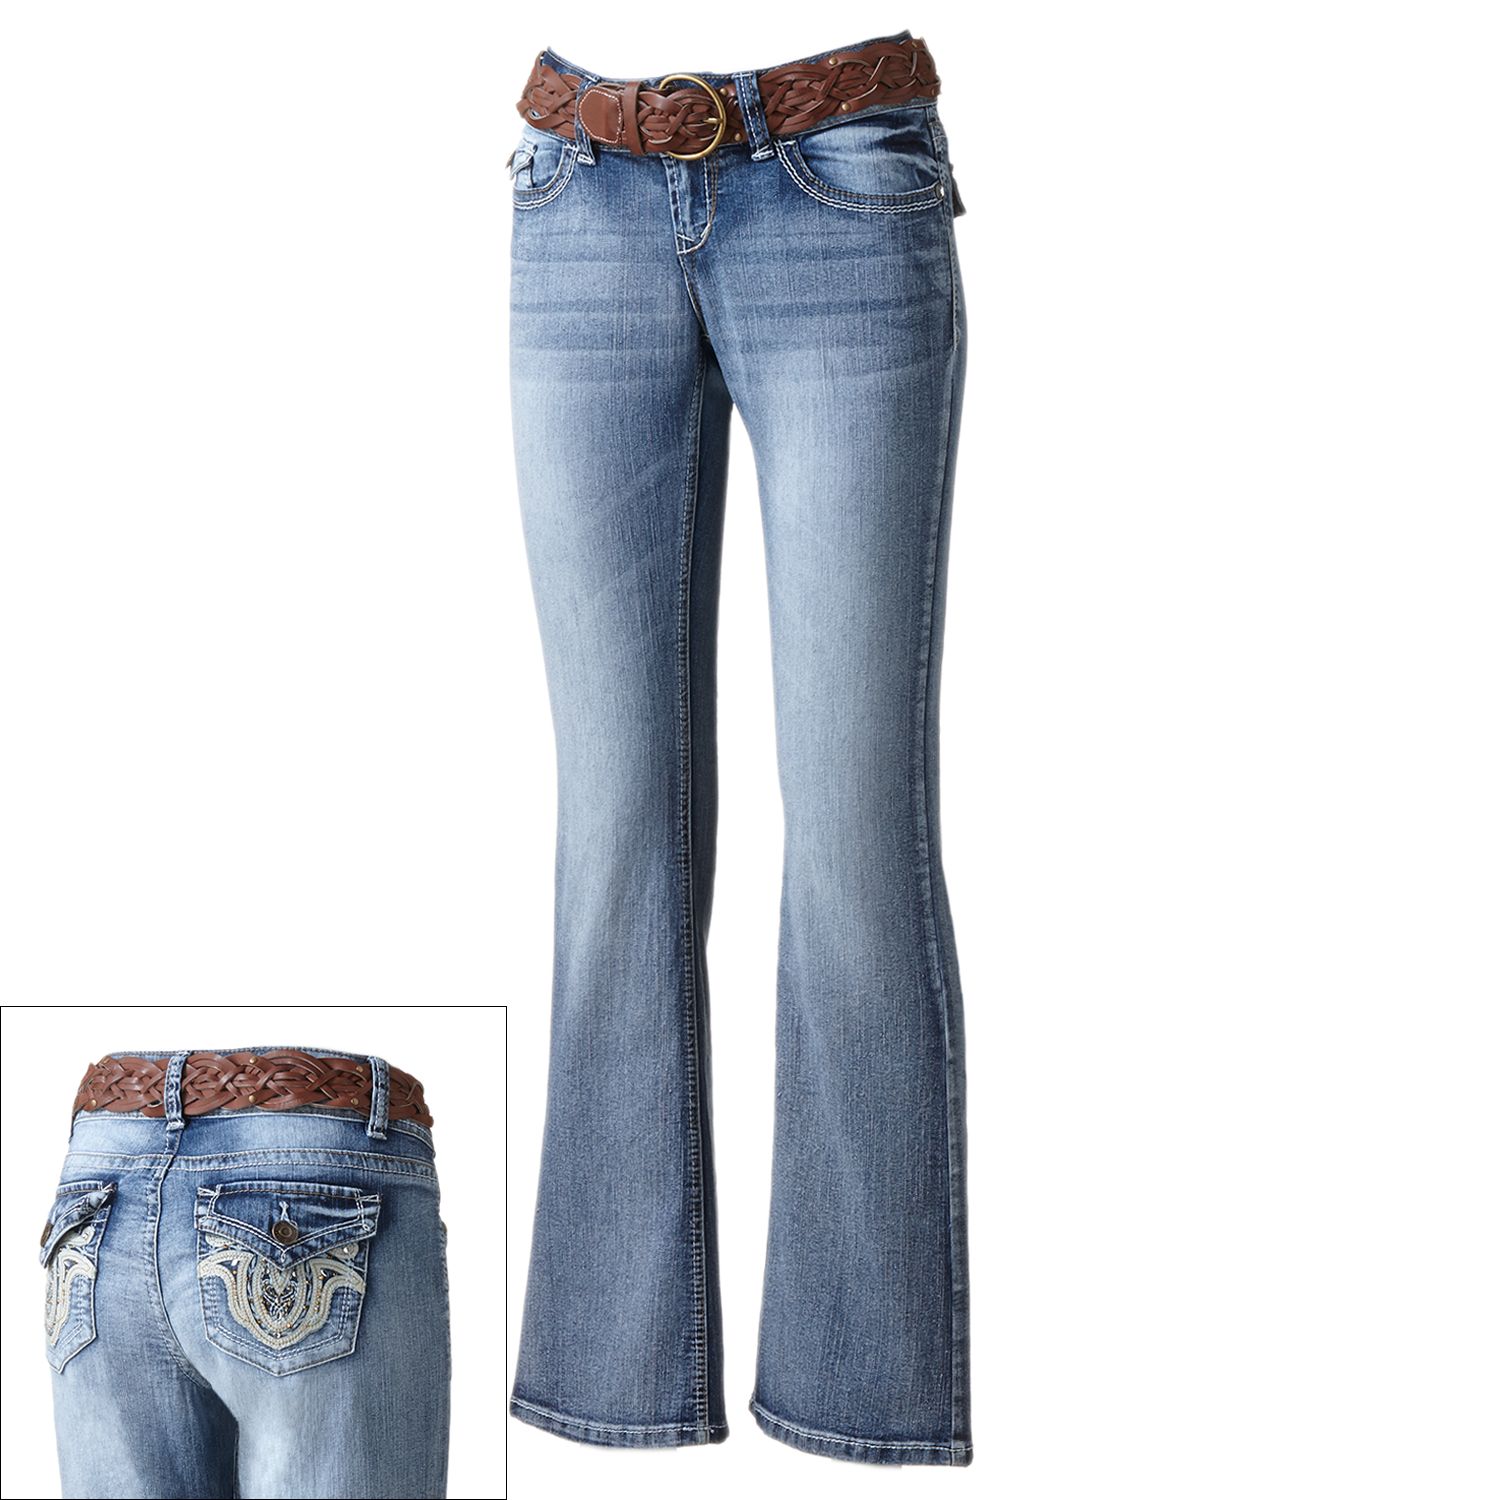 kohl's wallflower jeans